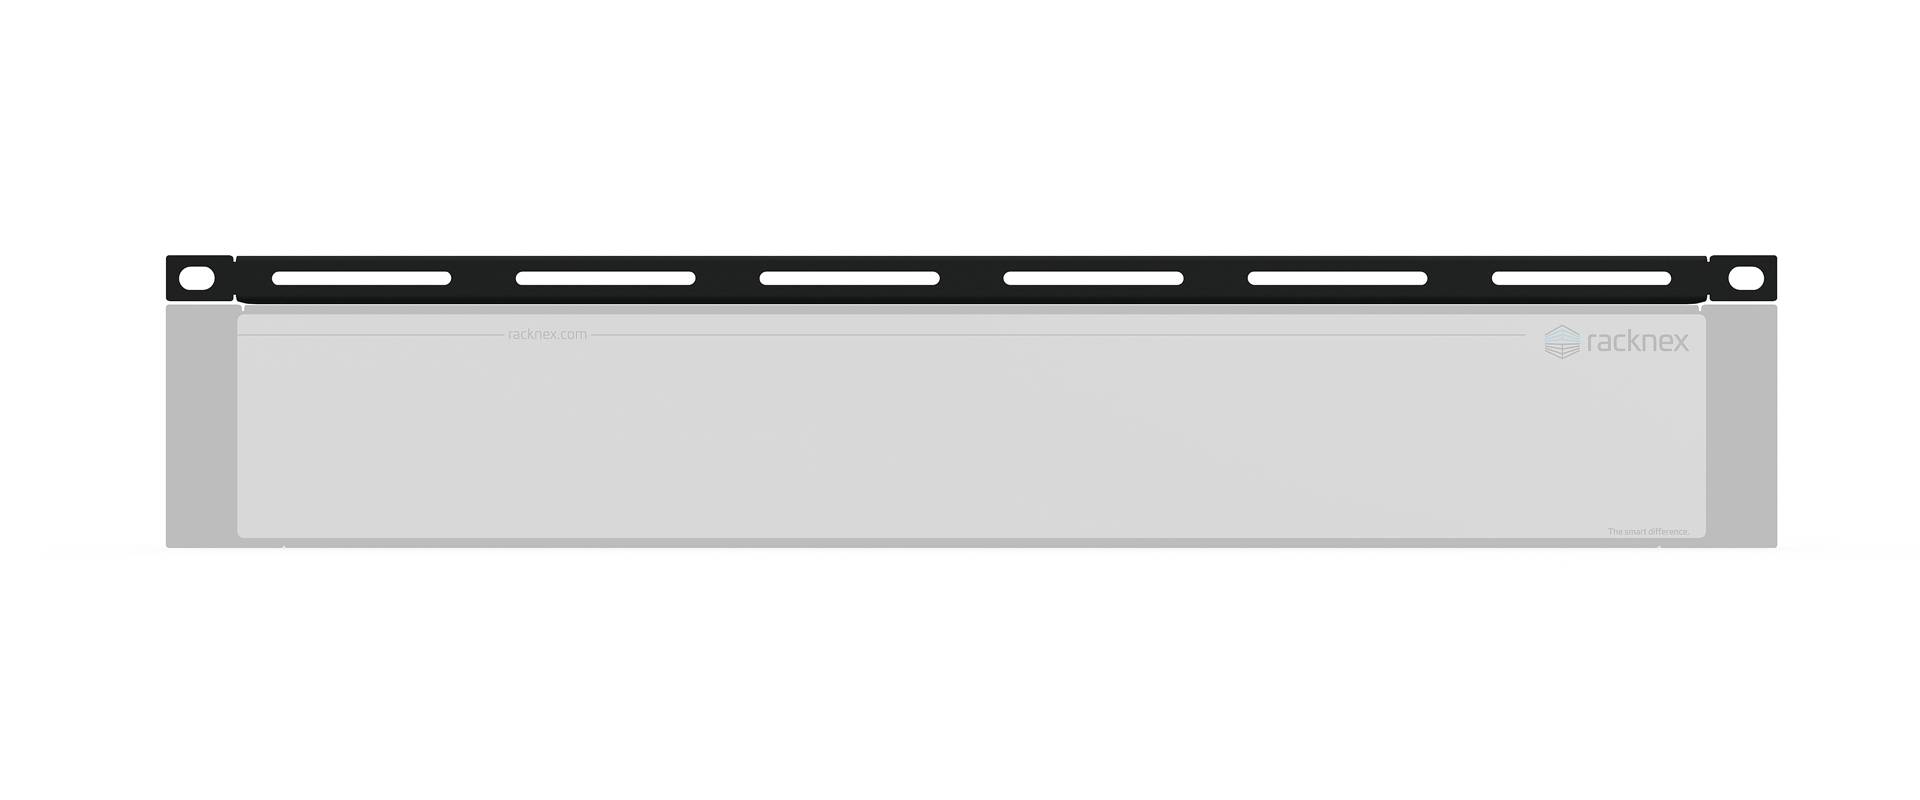 zr-frv-001 with Rack Panel 0.33U